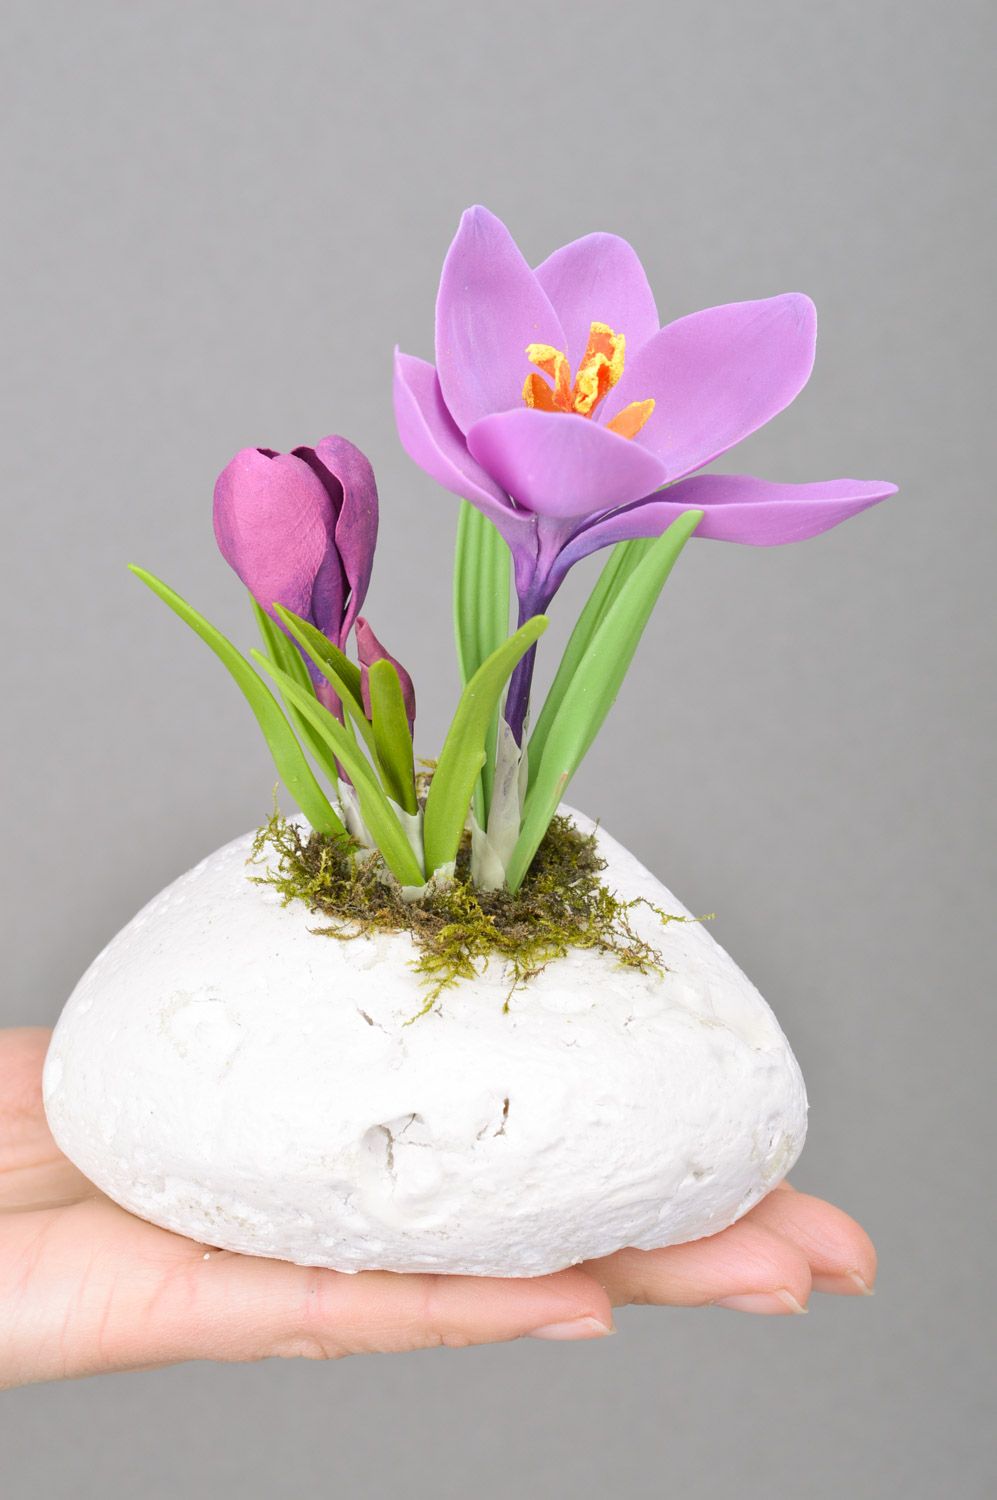 Handmade artificial violet crocus flower molded of polymer clay interior decor photo 3